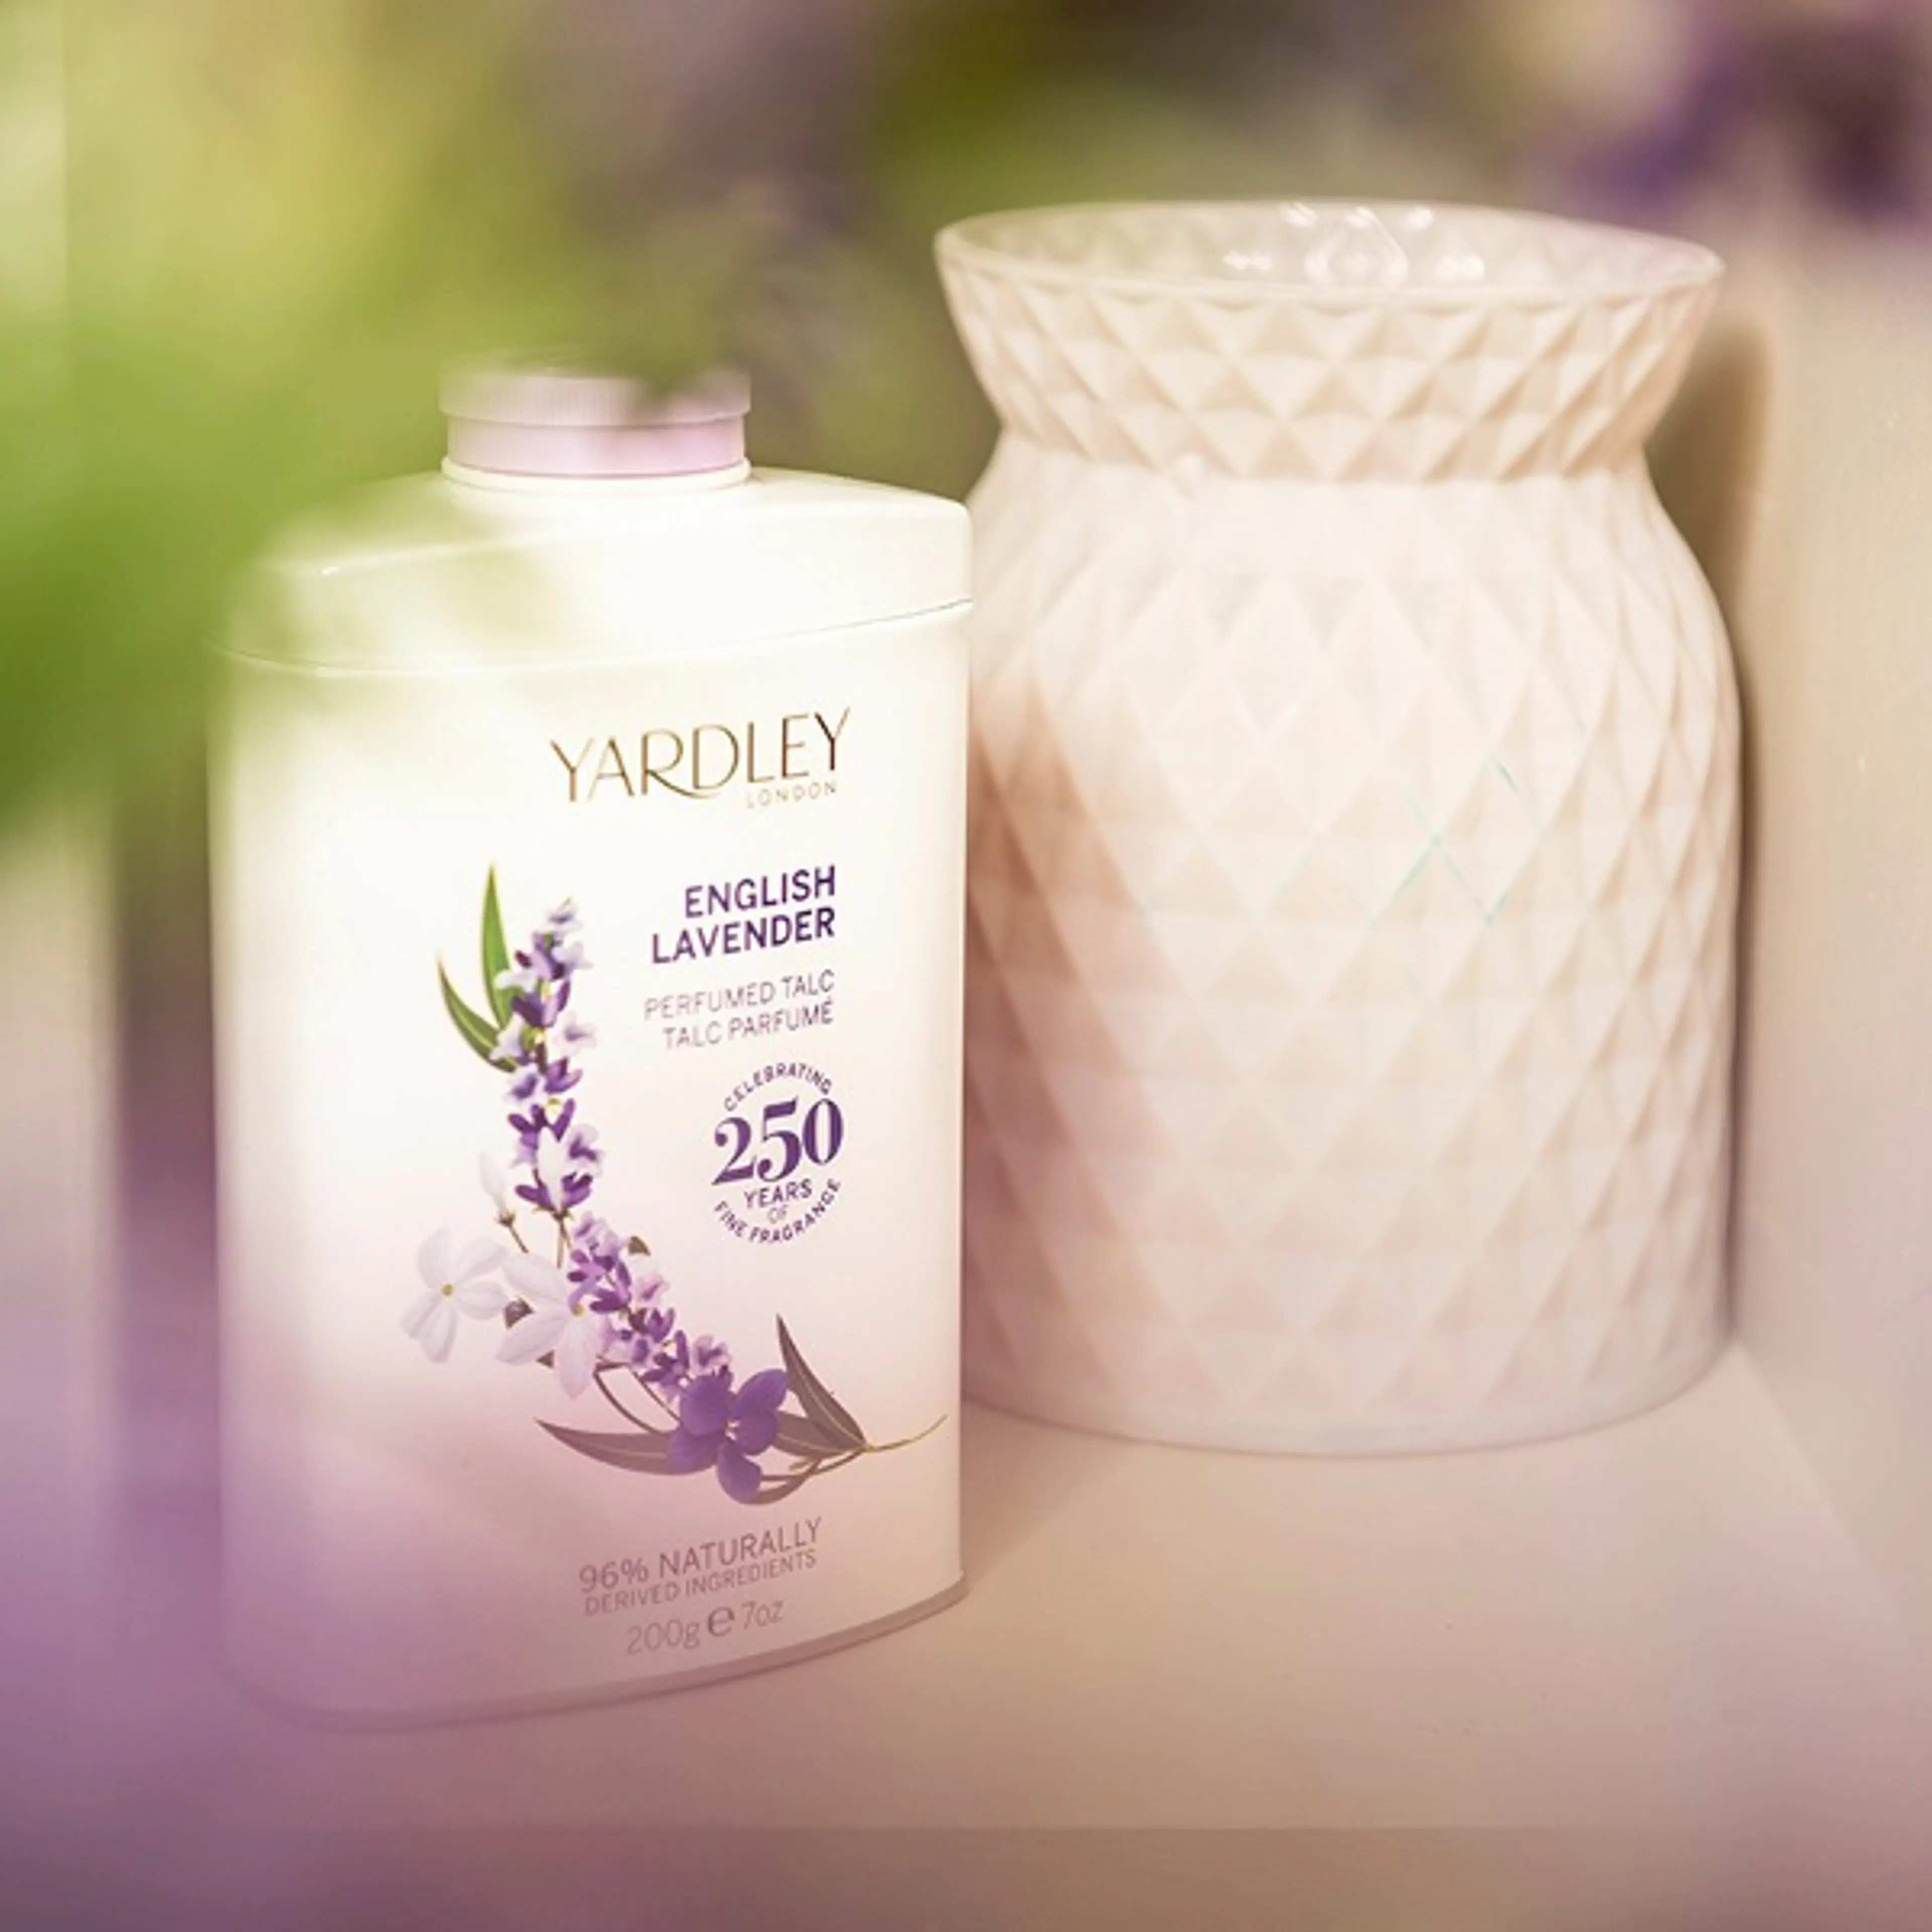 Yardley London English Lavender Perfumed Talc talkki 200 g